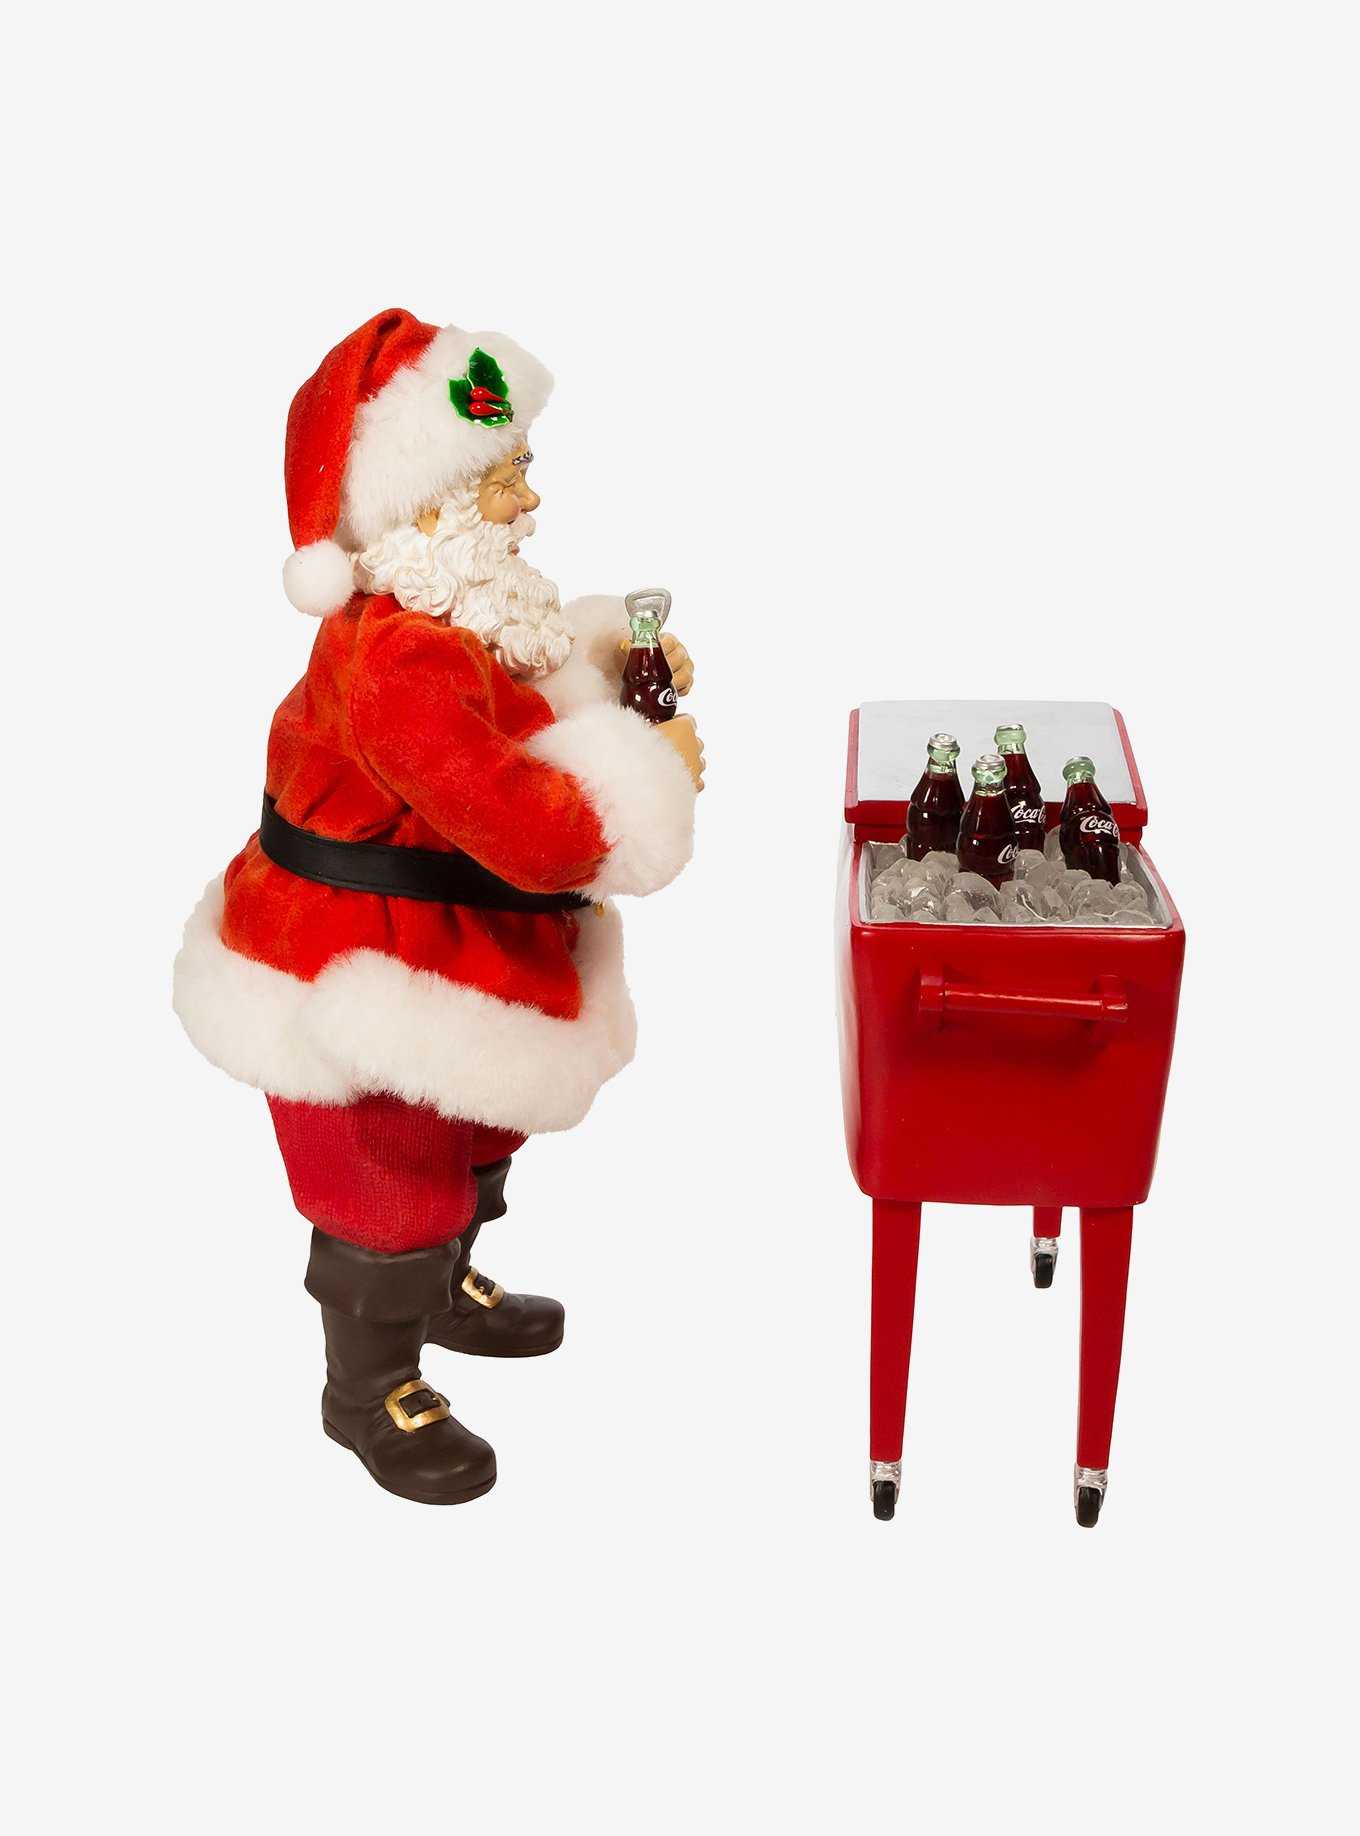 Kurt Adler Coke Santa with Table Cooler Figure, , hi-res